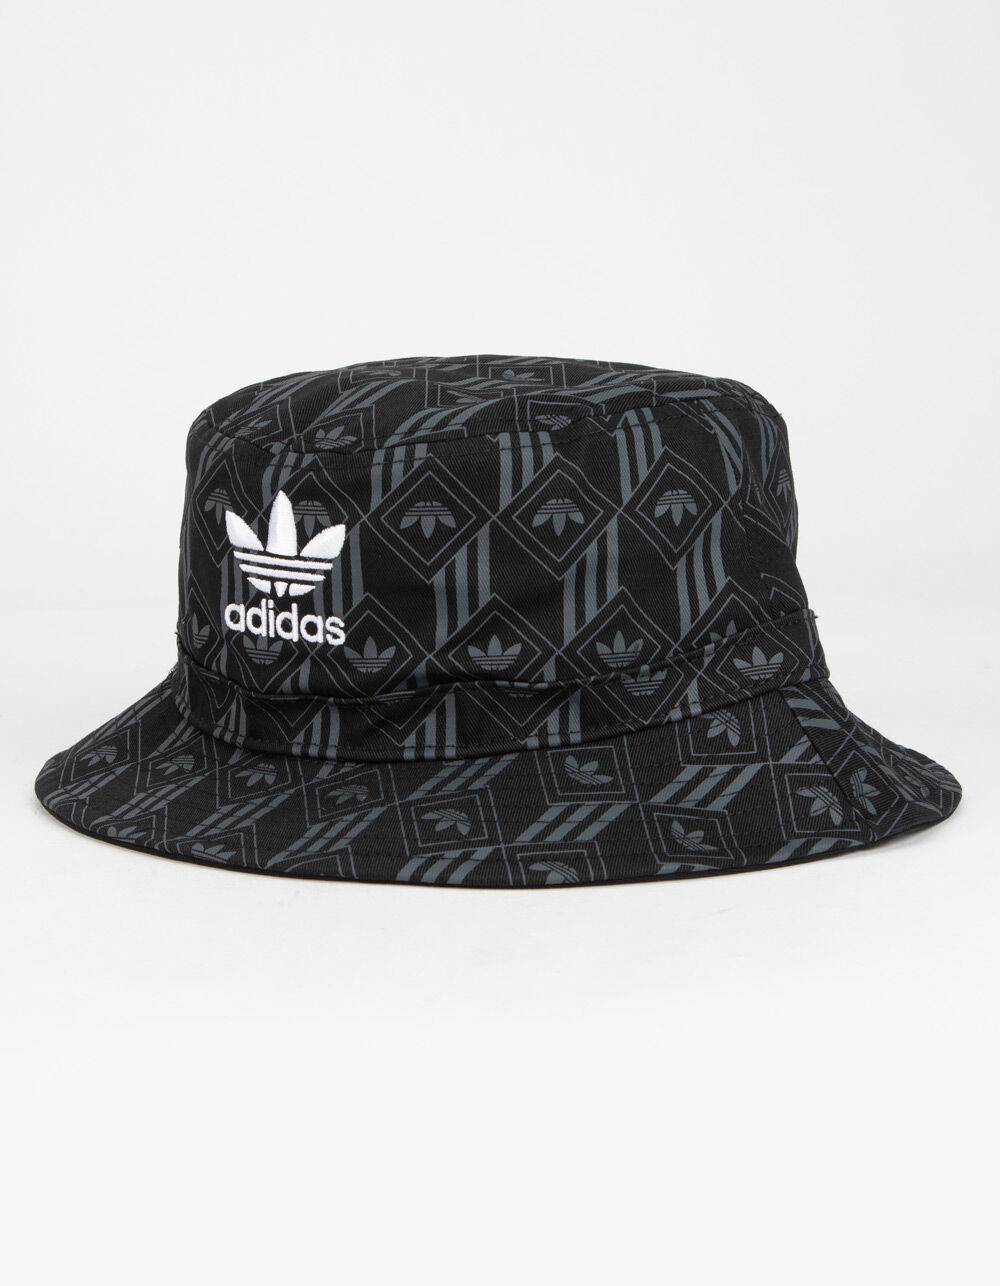 Adidas Trefoil Monogram Bucket Hat Black 1 Size - Originals Hats